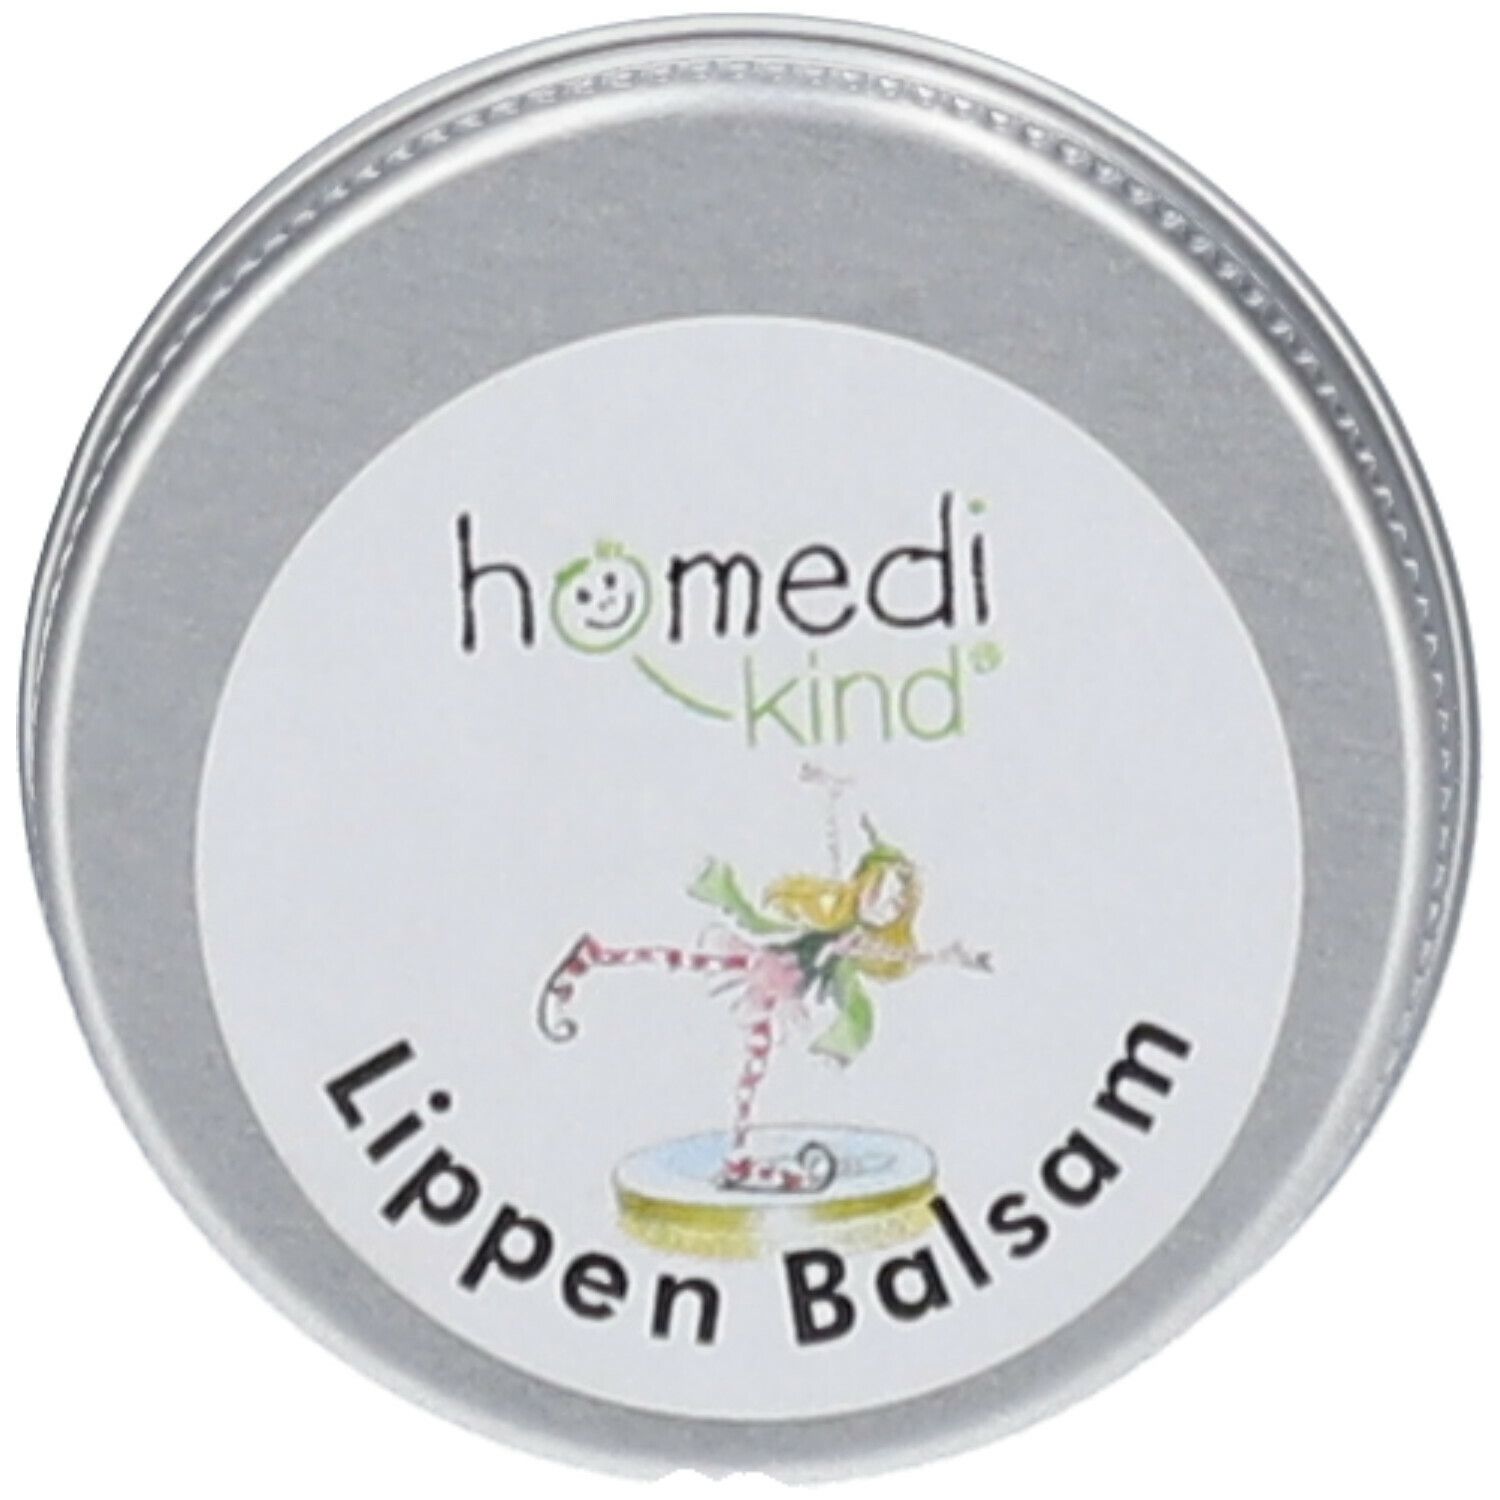 homedi-kind® Lippen Balsam